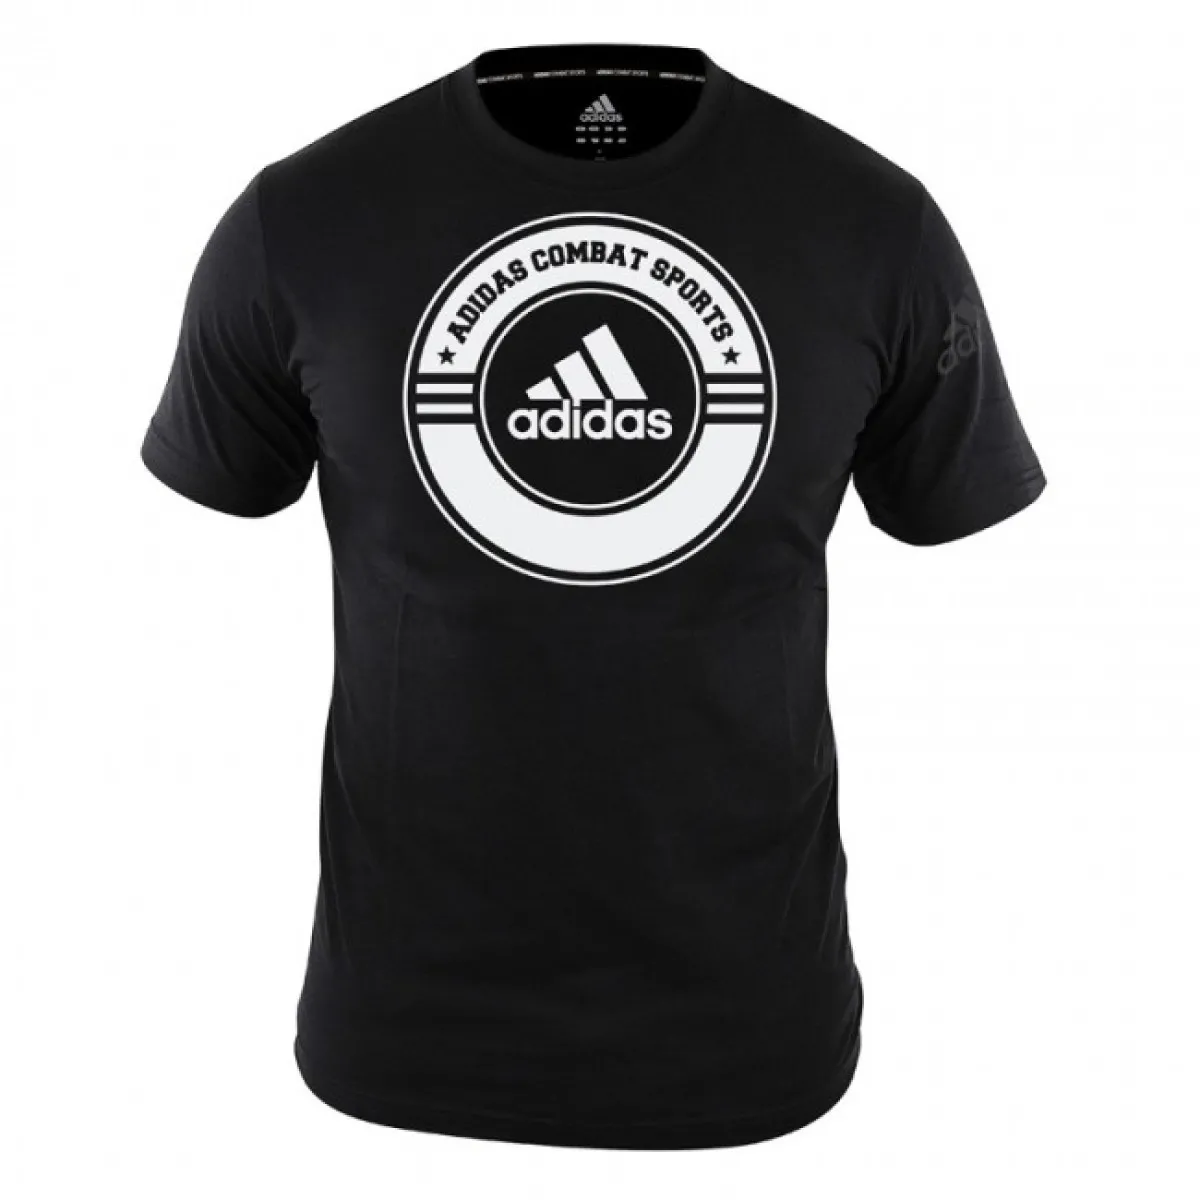 adidas T-shirt Combat Sports zwart/wit